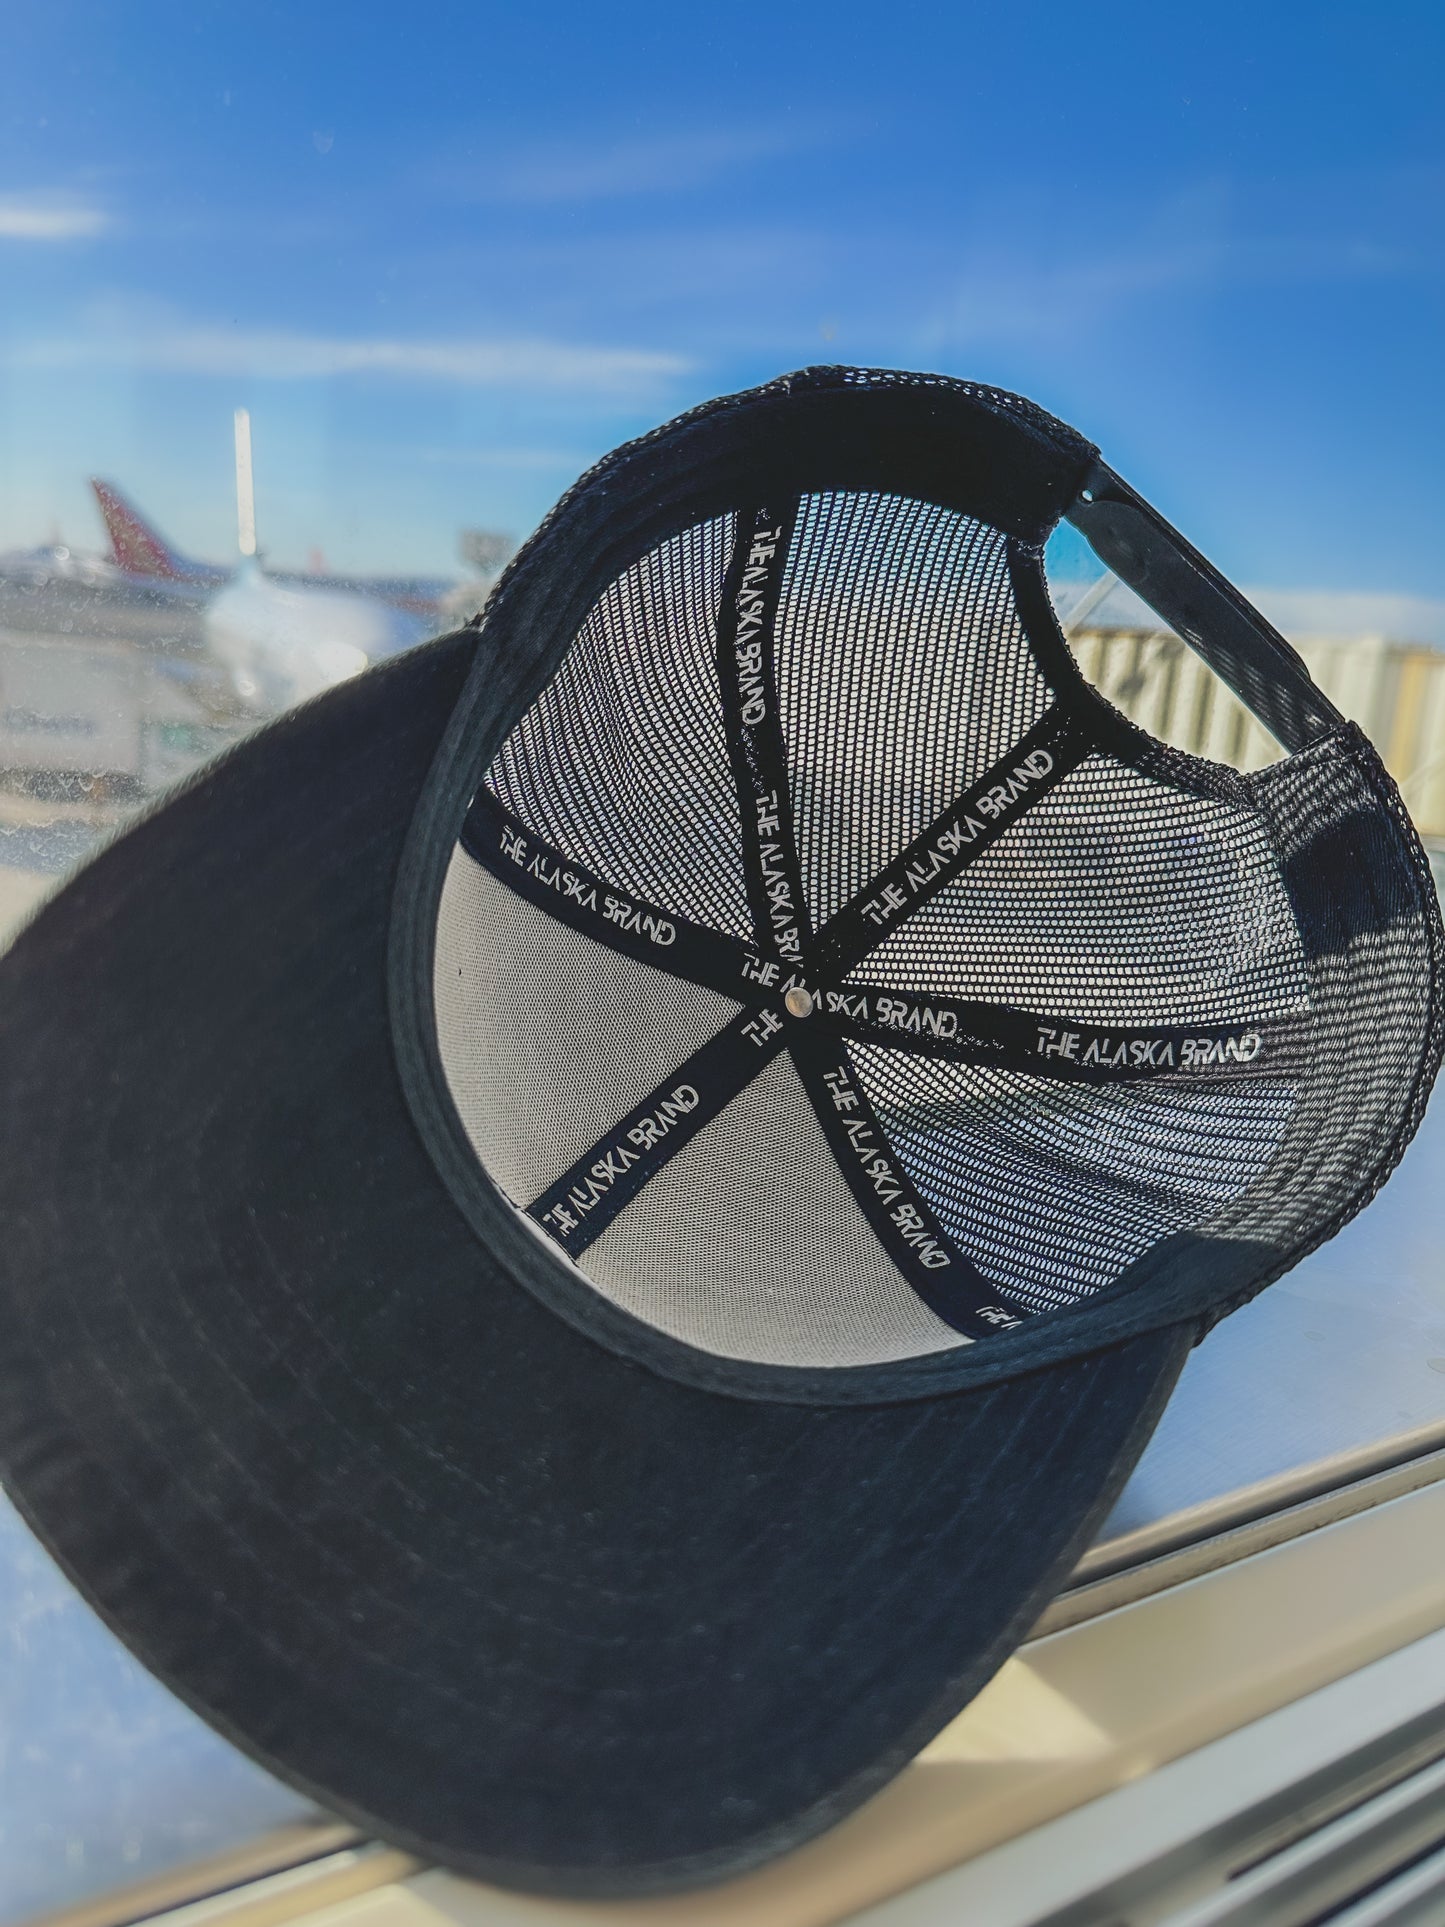 The Alaska Brand Hat